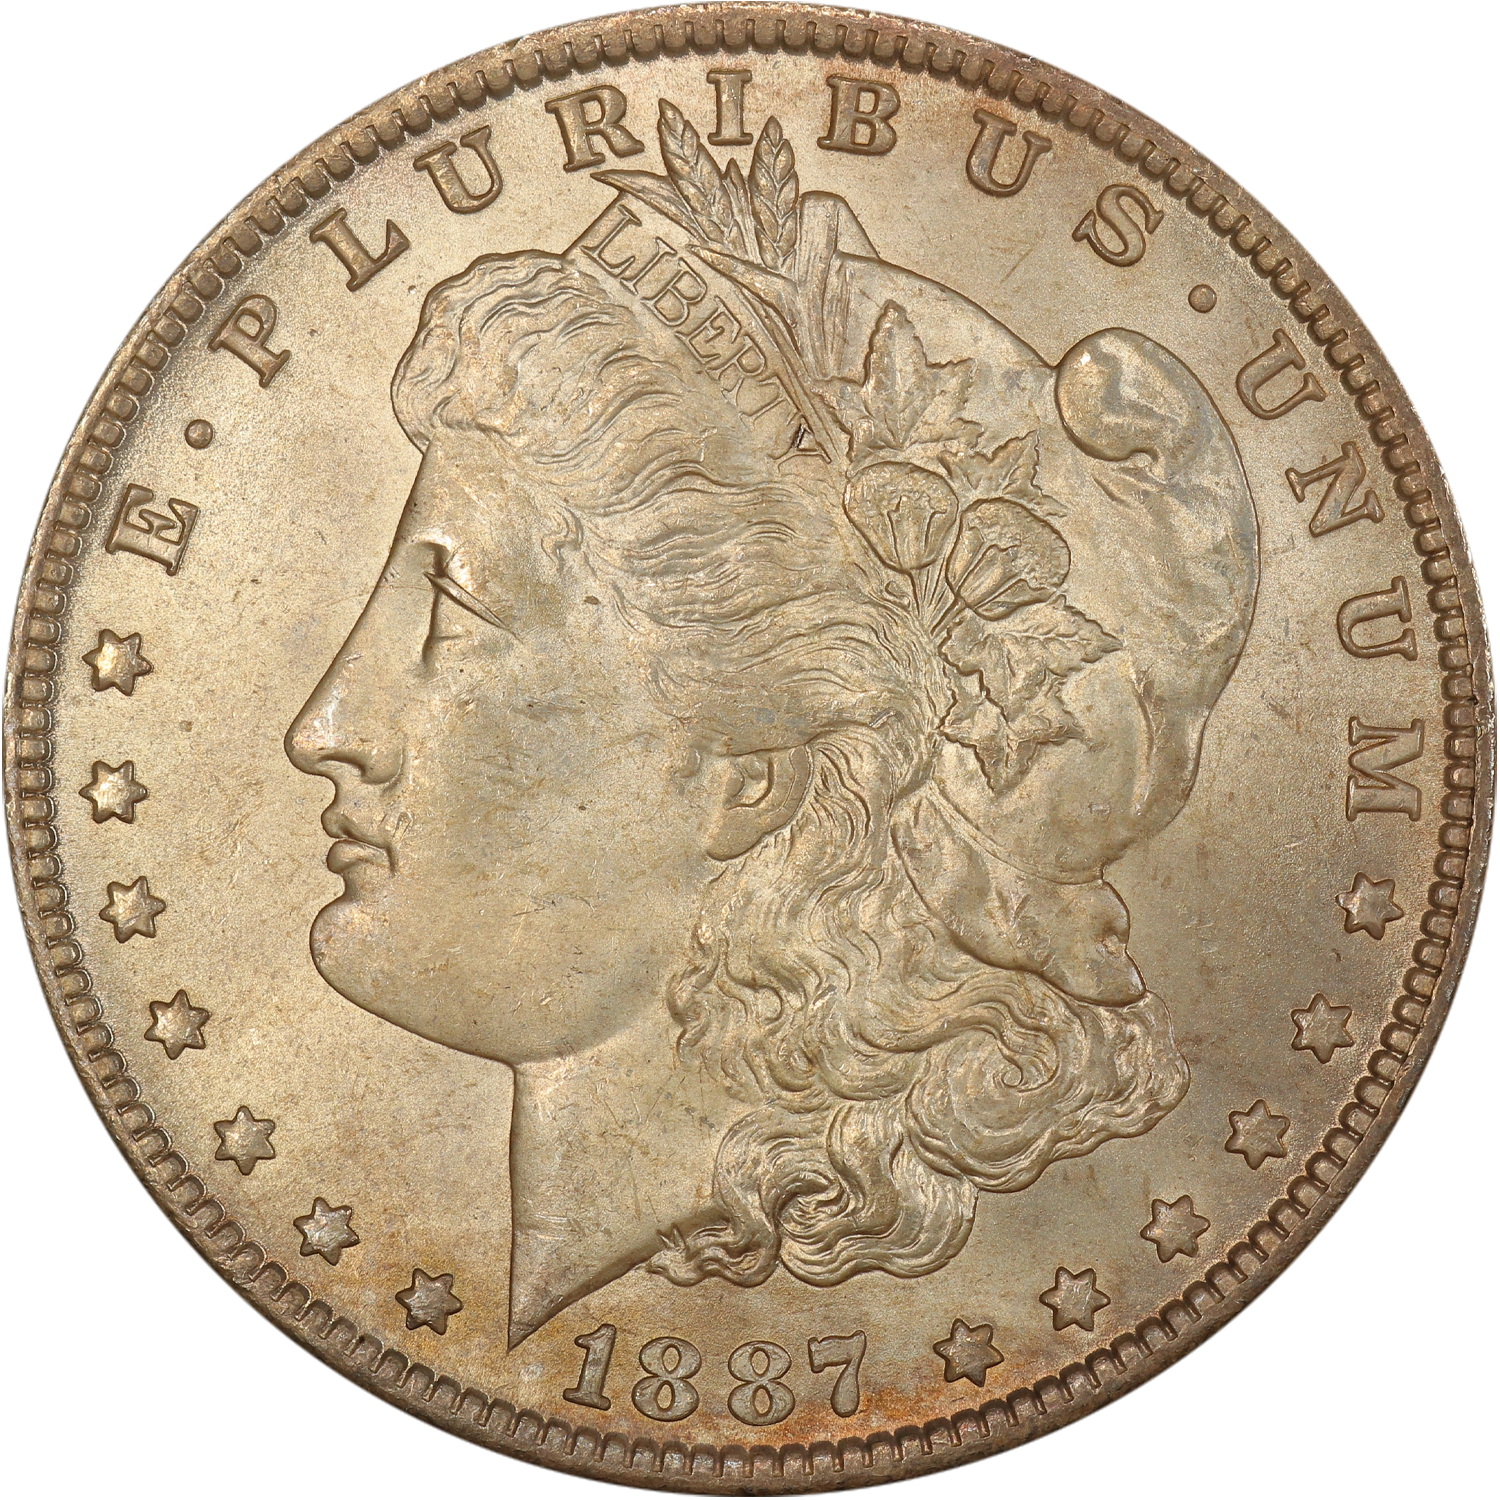 1887 over 6 new orleans morgan silver dollar